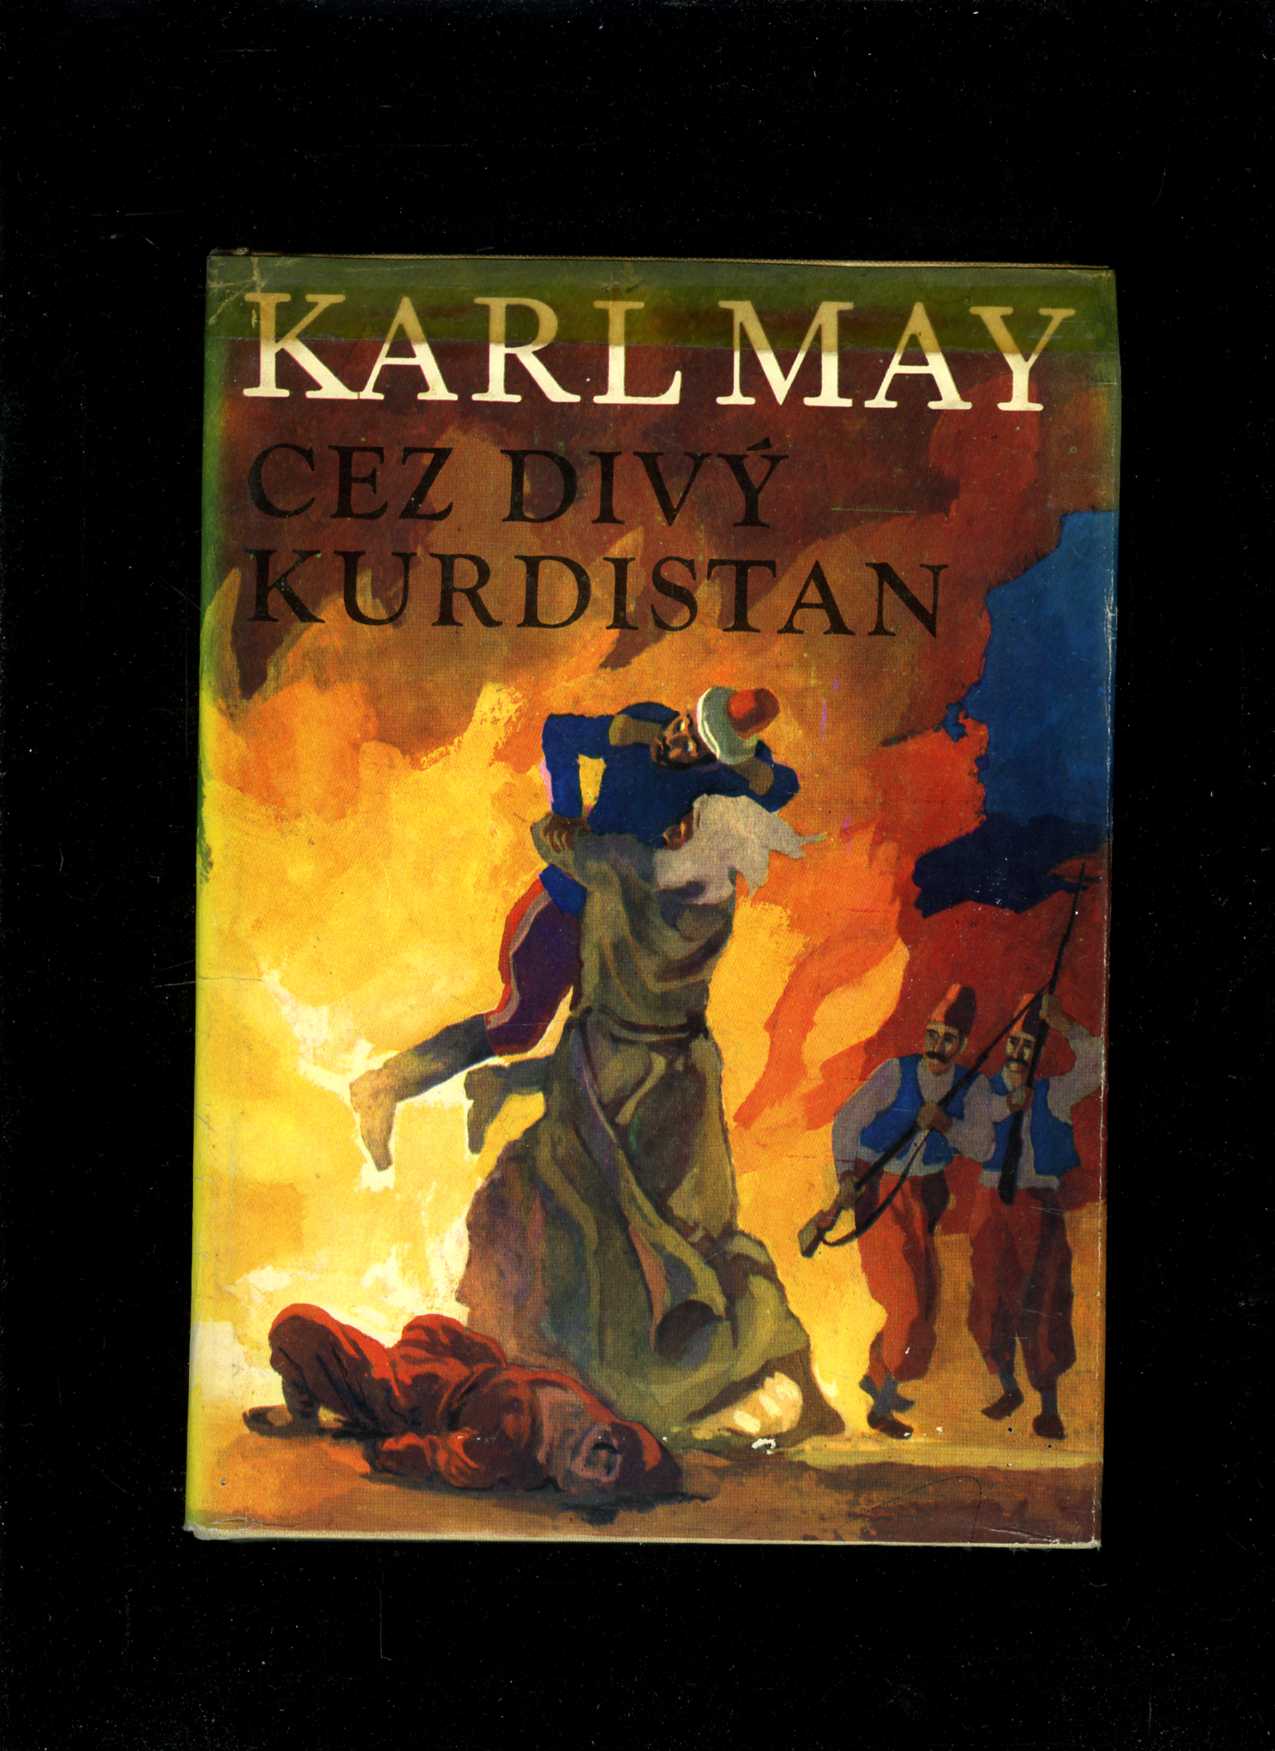 Cez divý Kurdistan (Karl May)